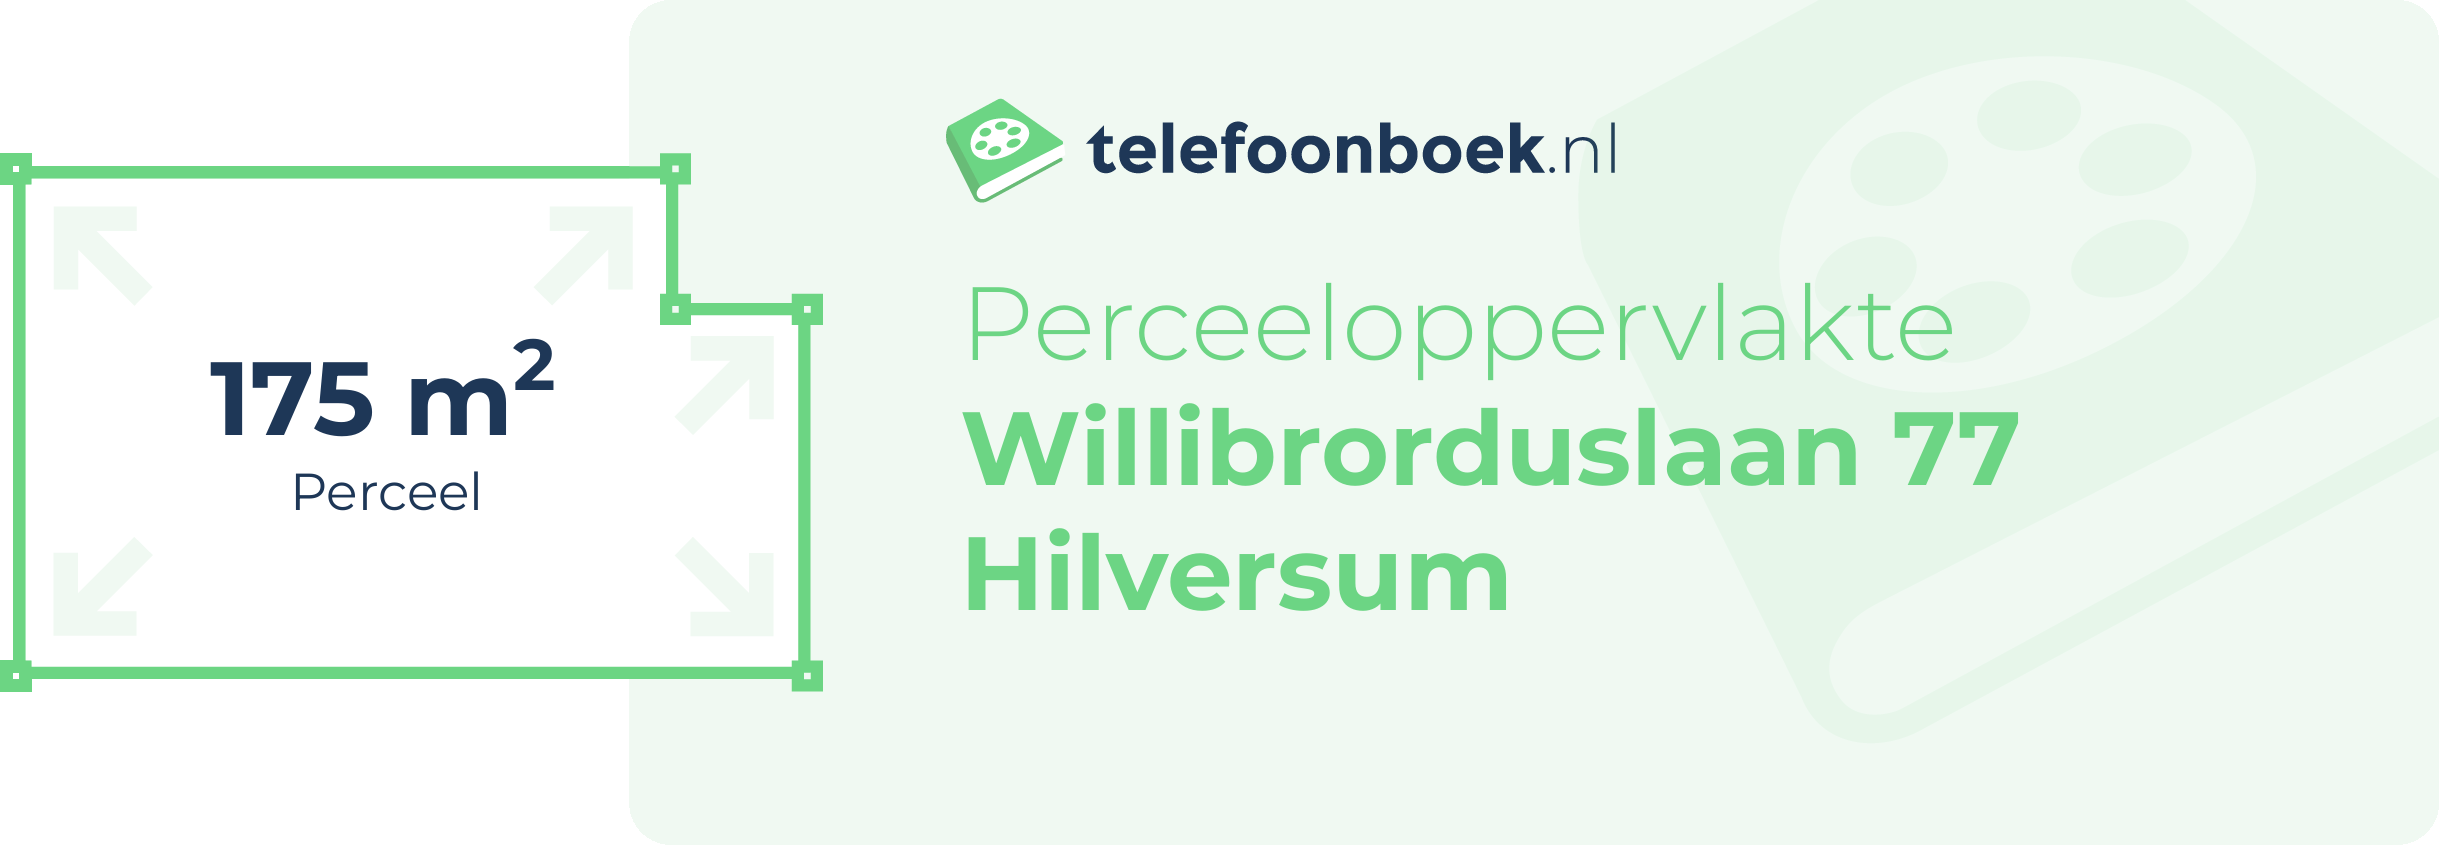 Perceeloppervlakte Willibrorduslaan 77 Hilversum